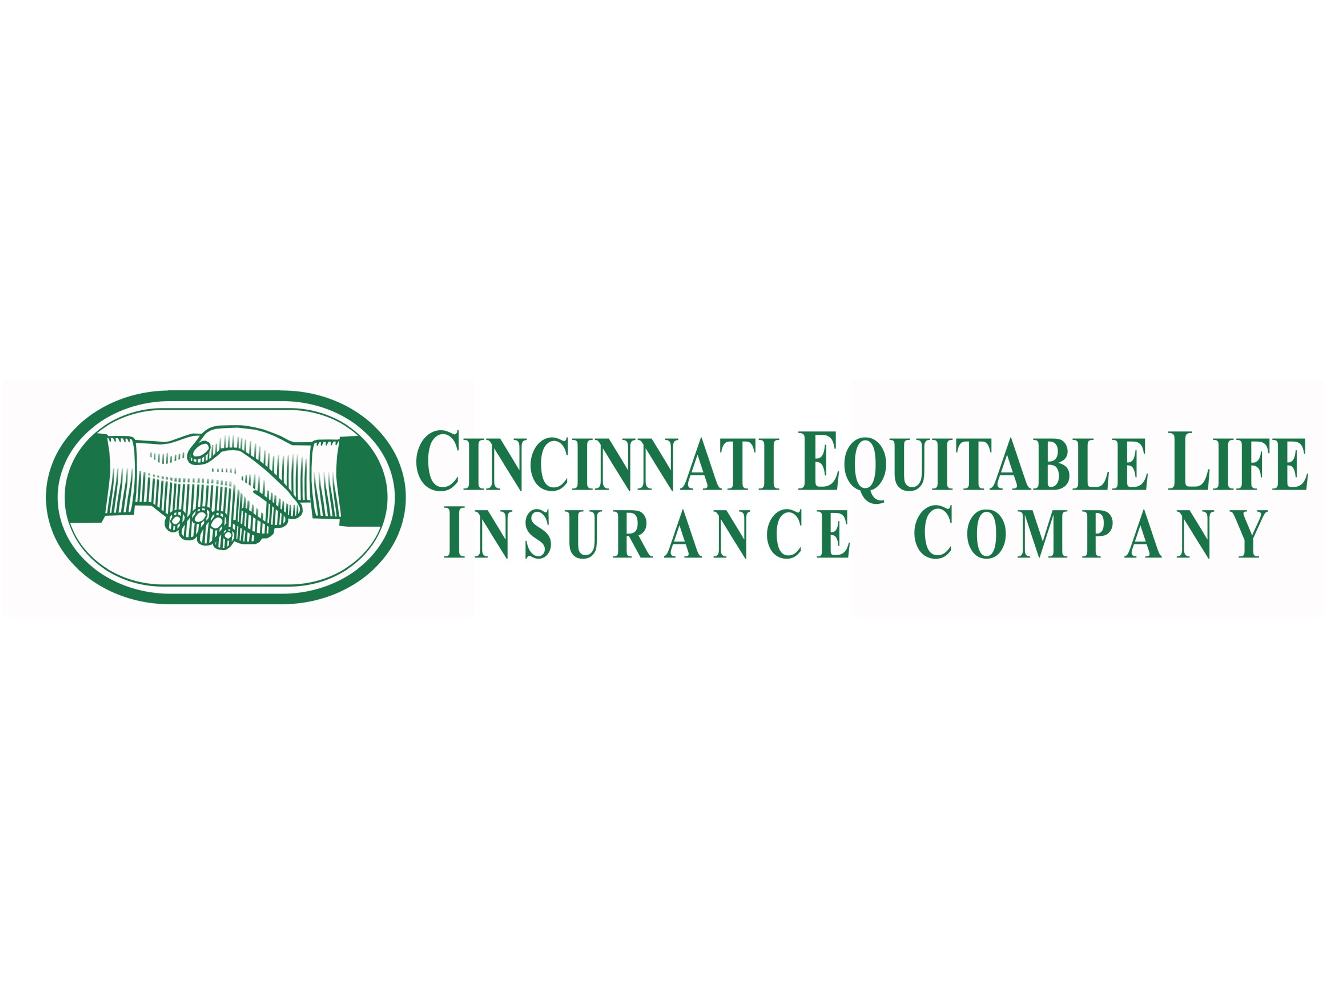 Cincinnati Equitable Life Insurance Co